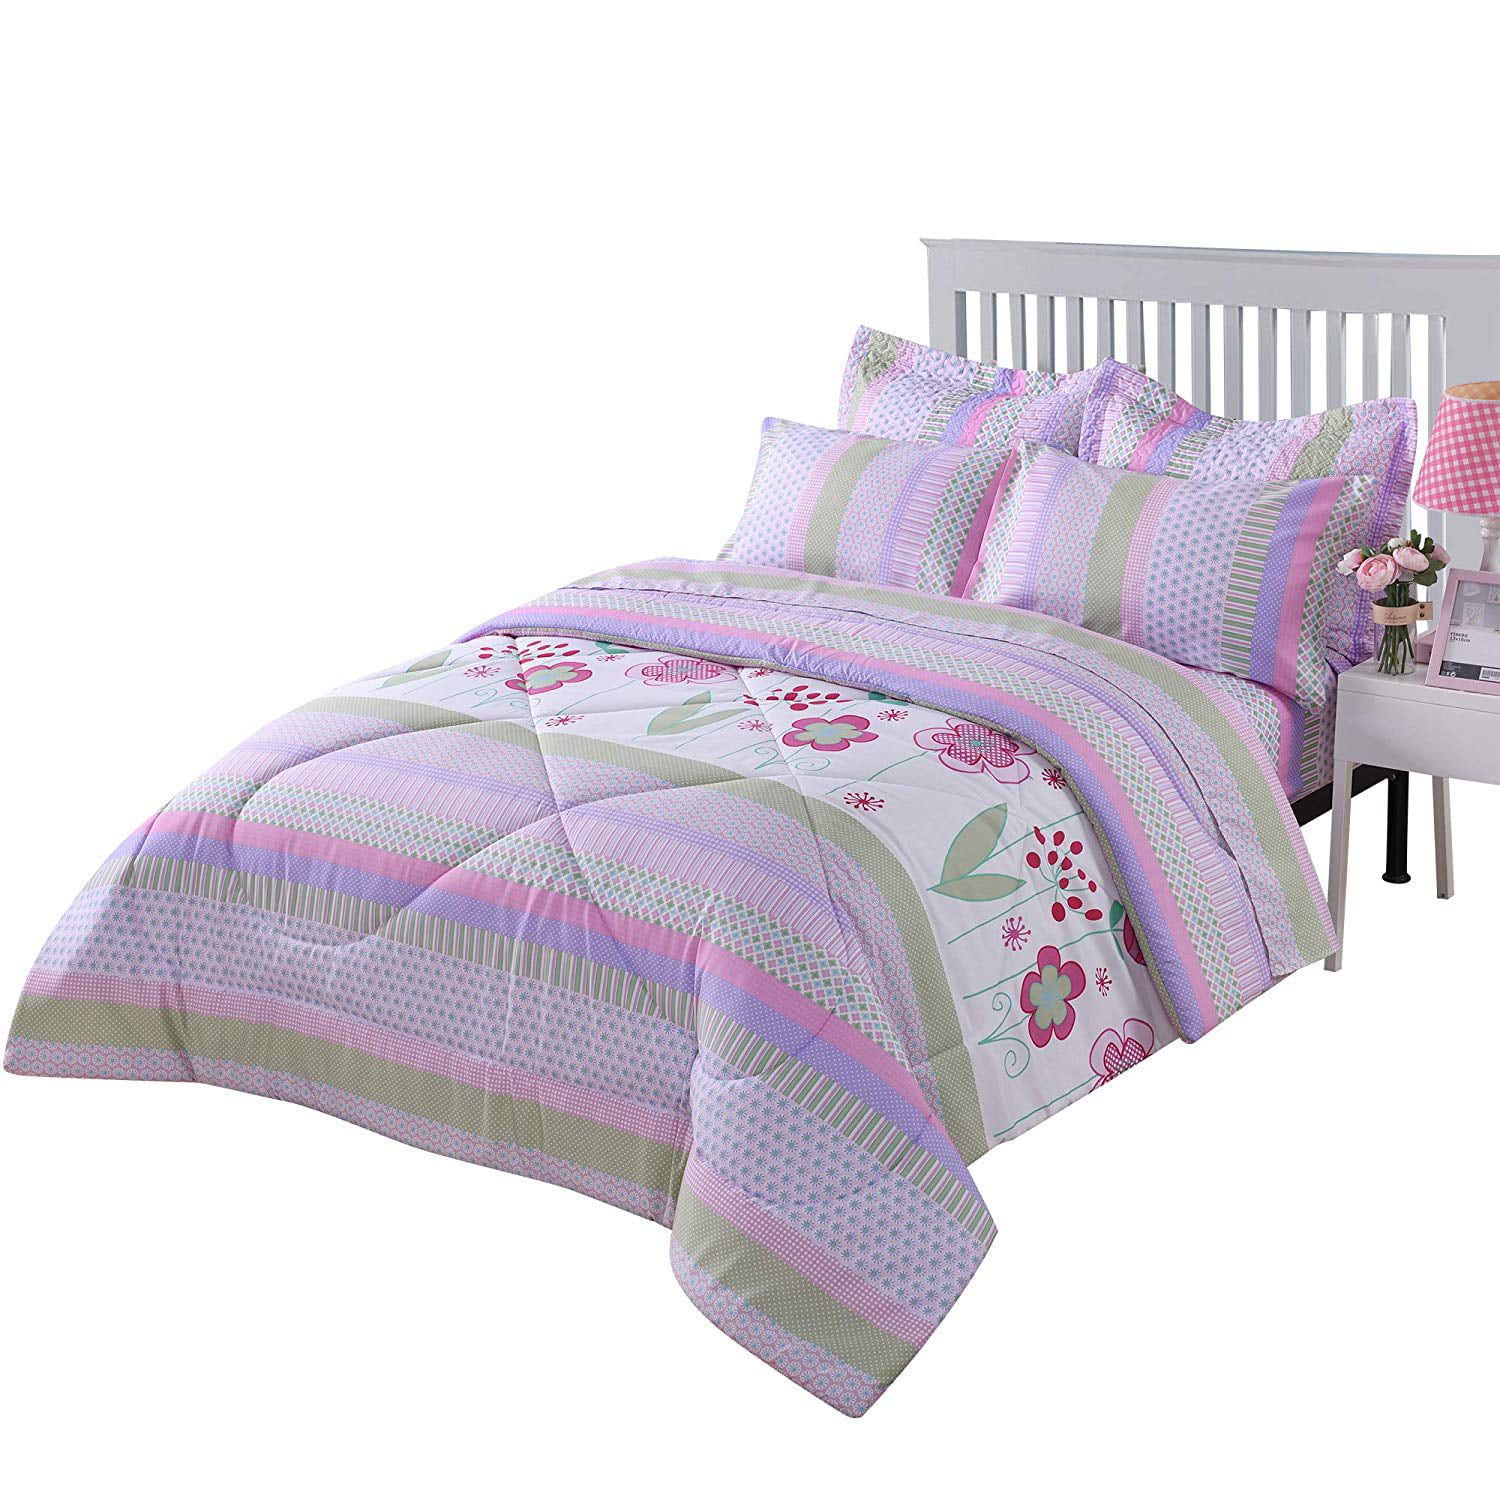 Marcielo Kids Comforter Set Girls, Twin Bunk Bed Sheet Sets